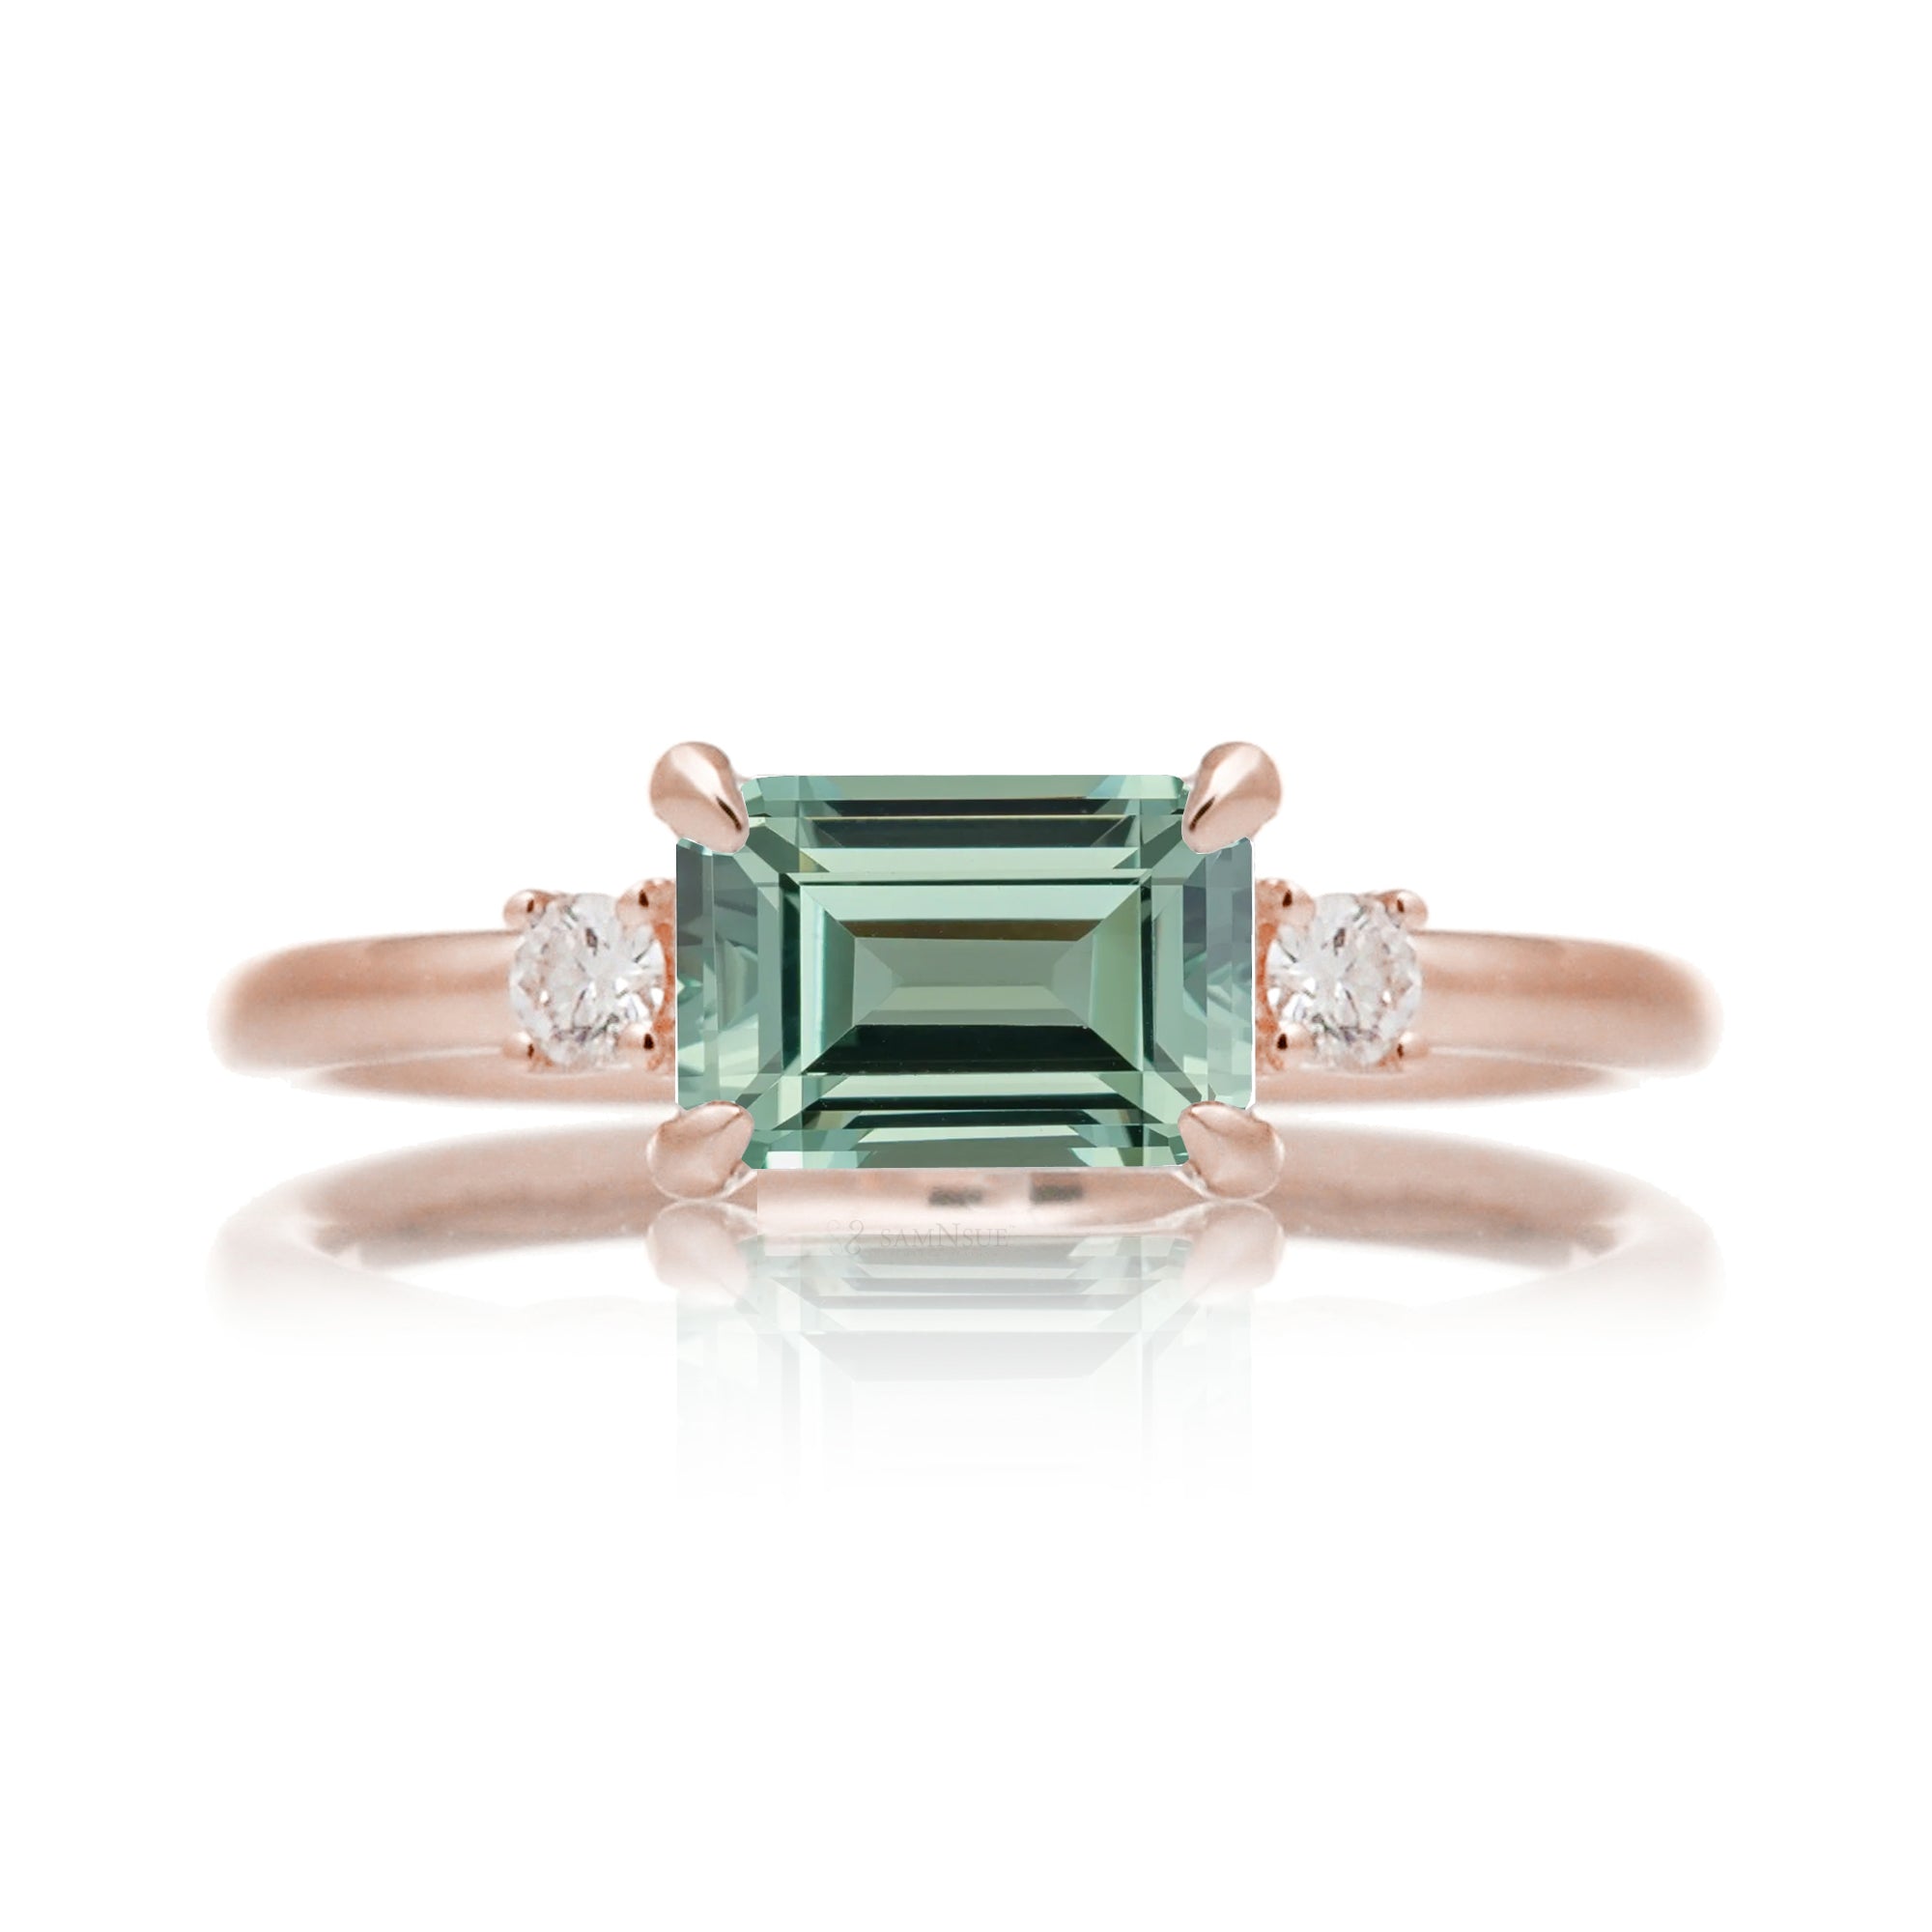 Emerald cut green sapphire three stone ring the Lena rose gold